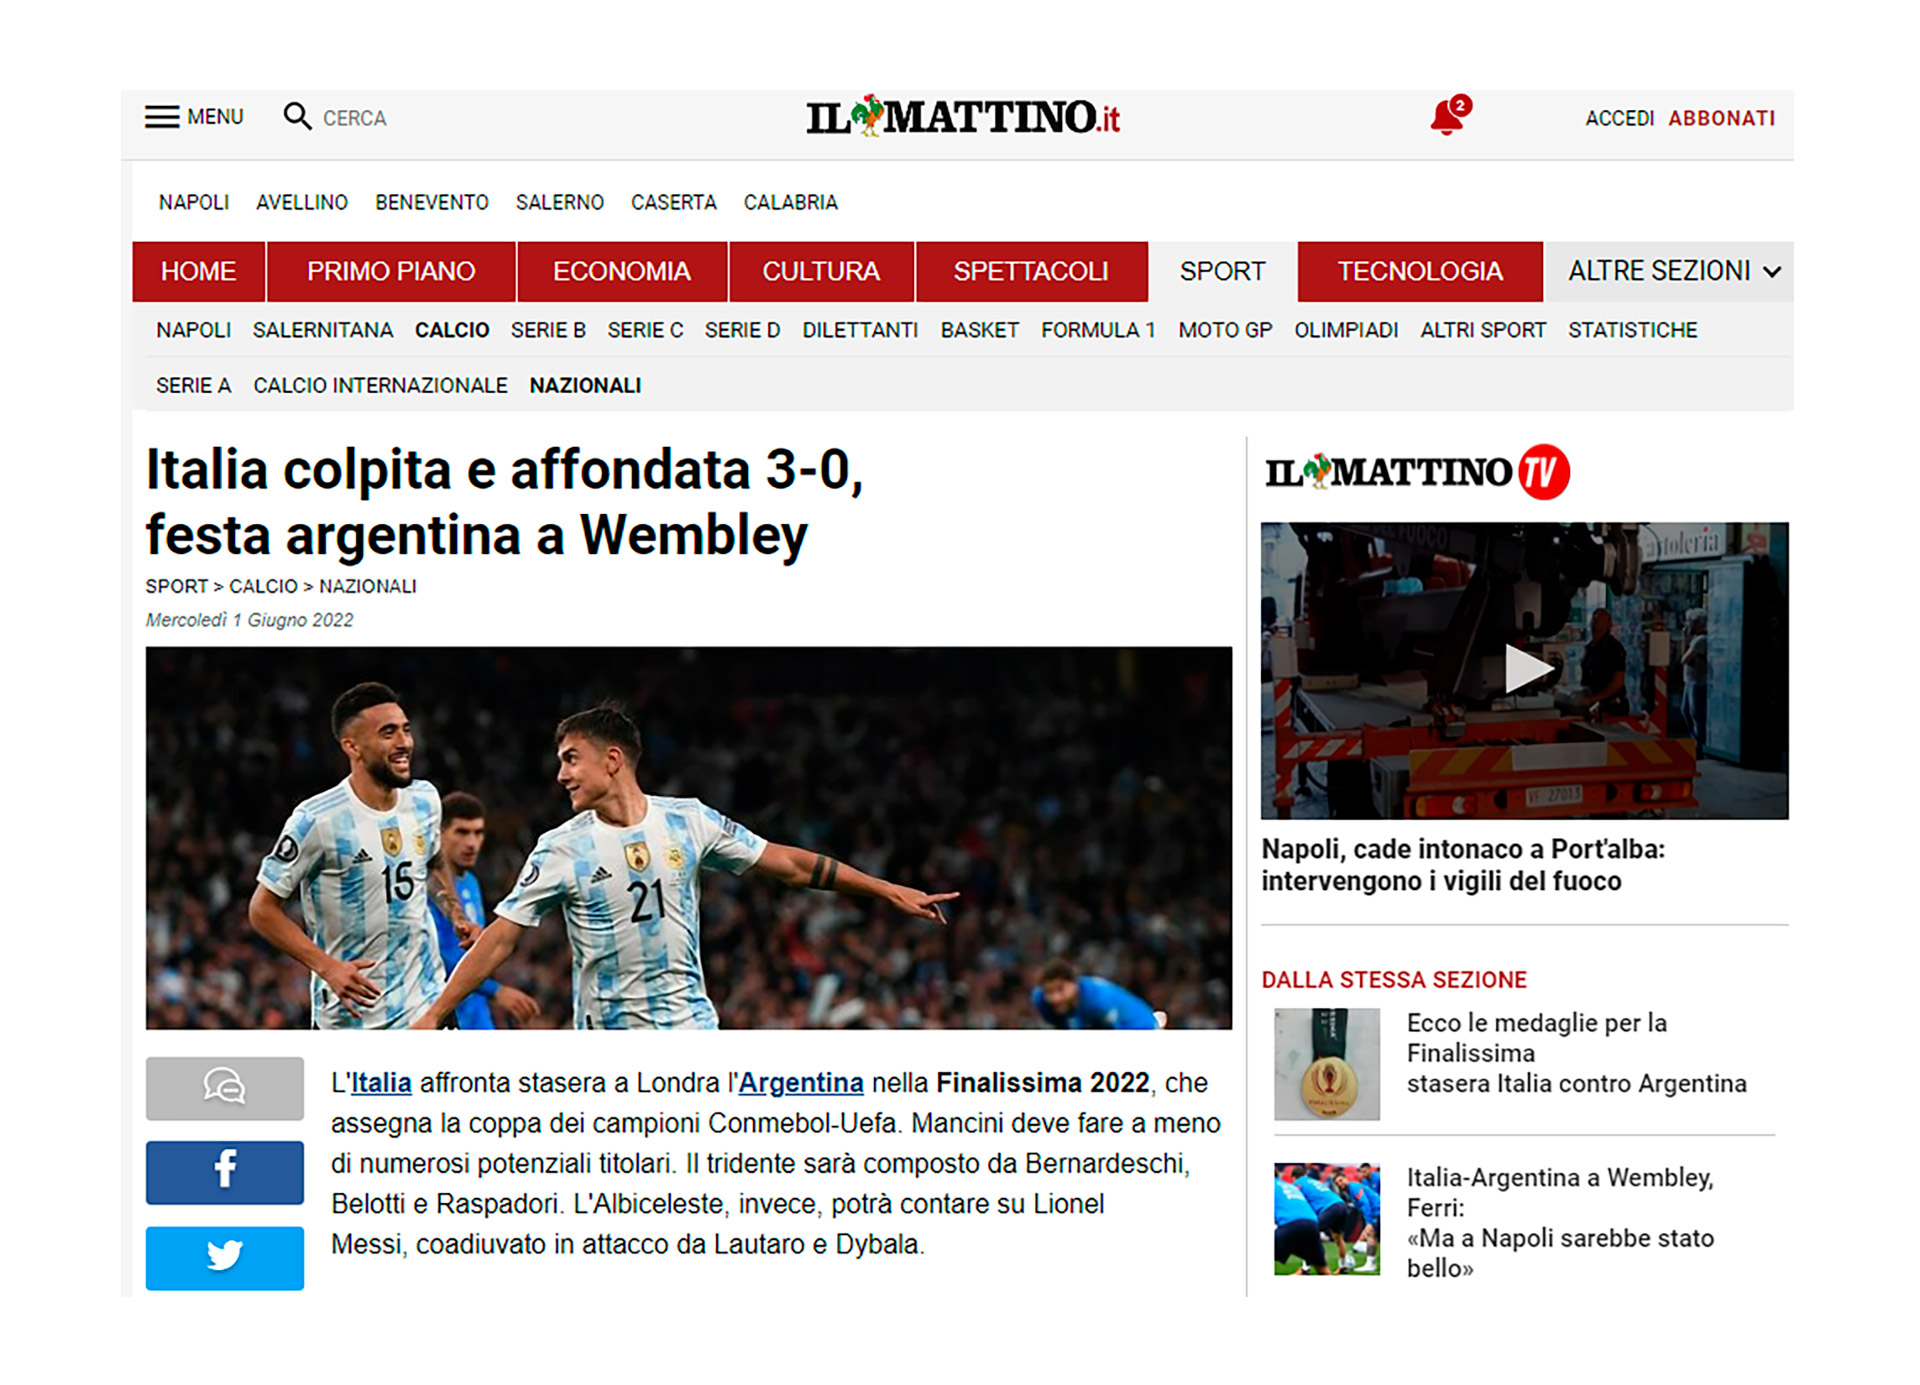 Italia goleapda y hundida 3-0, fiesta argentina en Wembley (Il Mattino)